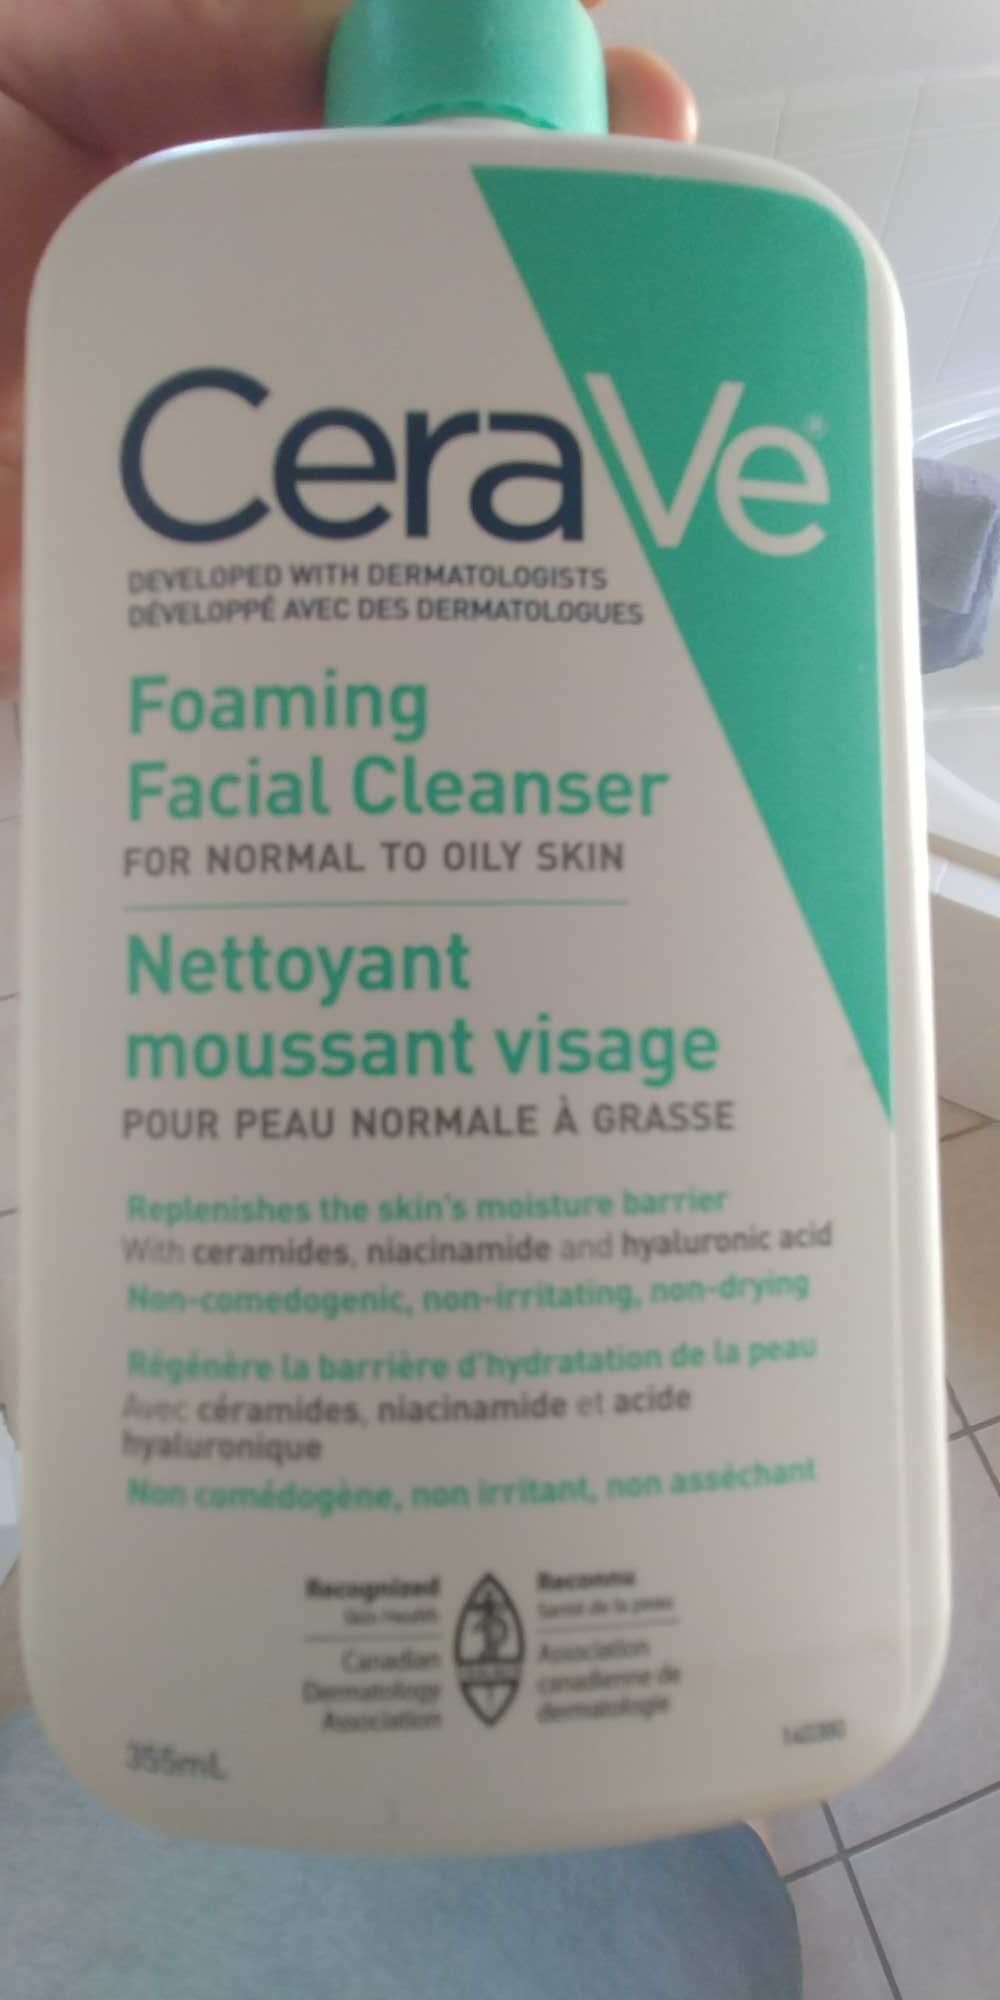 Foaming Facial Cleanser - Produit - en